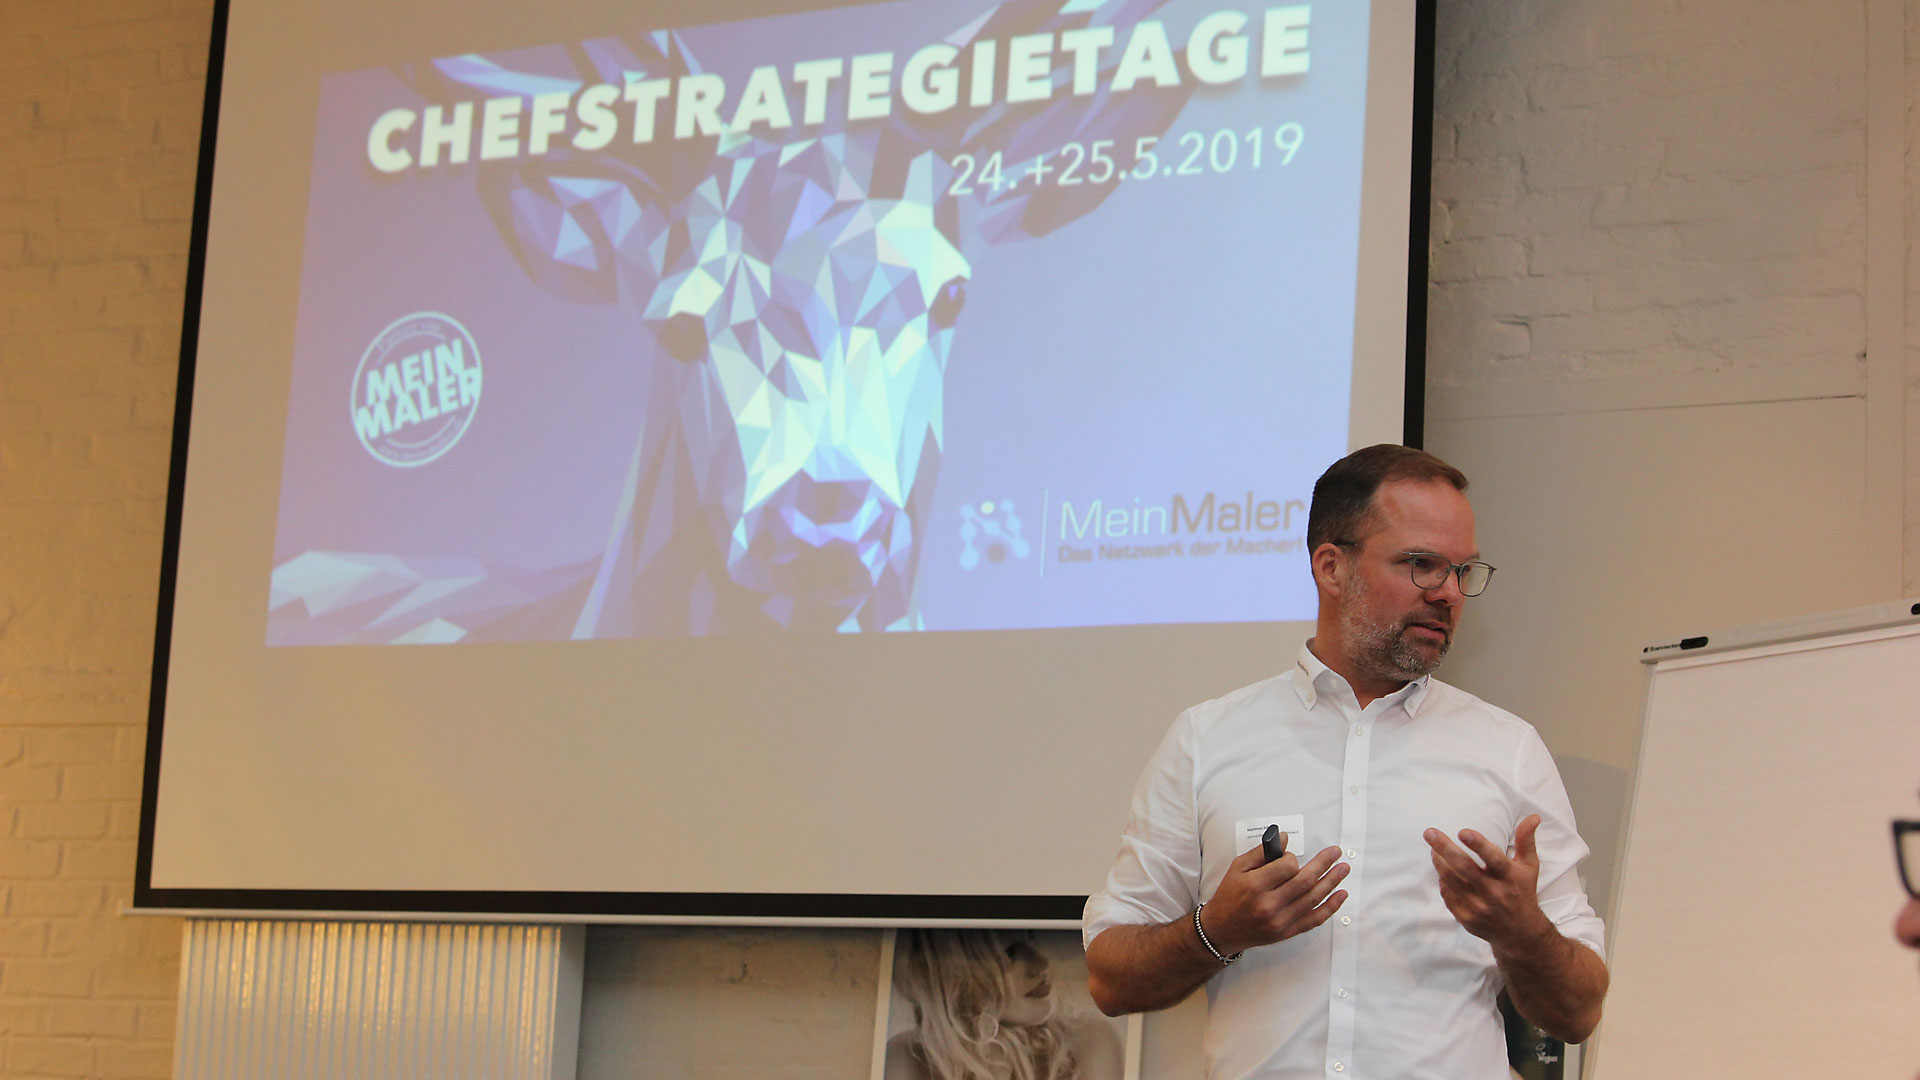 MeinMaler ChefStrategietage 2019 02